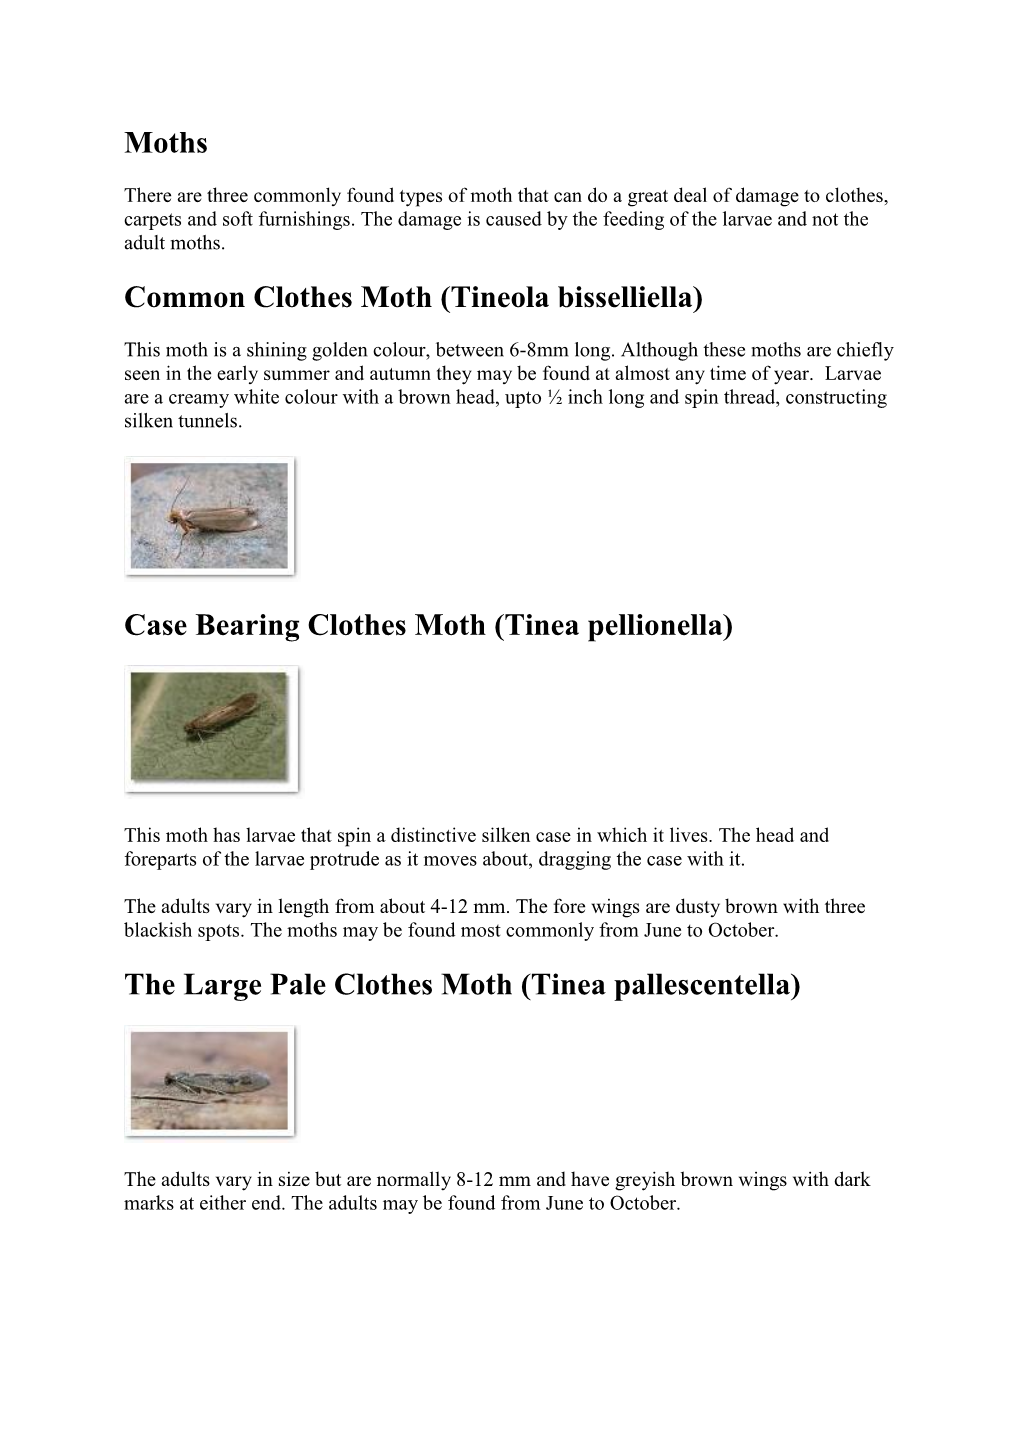 Moths Common Clothes Moth